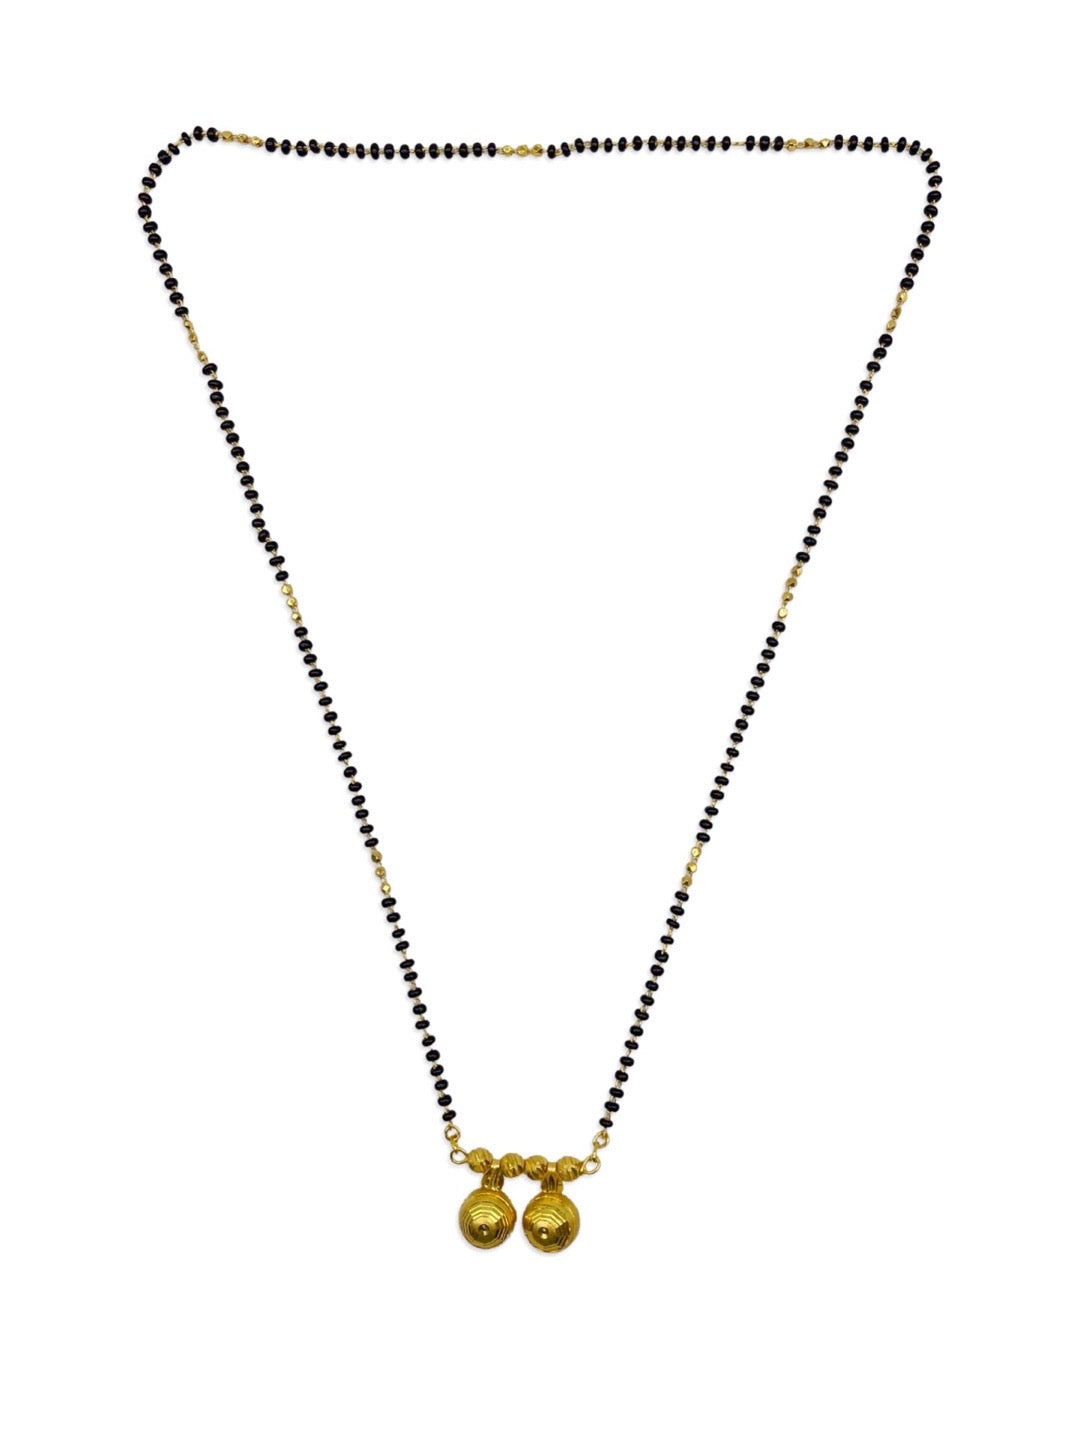 Short Mangalsutra Designs Gold Plated Latest 2 Vati Pendant Black Gold Beads Mangalsutra